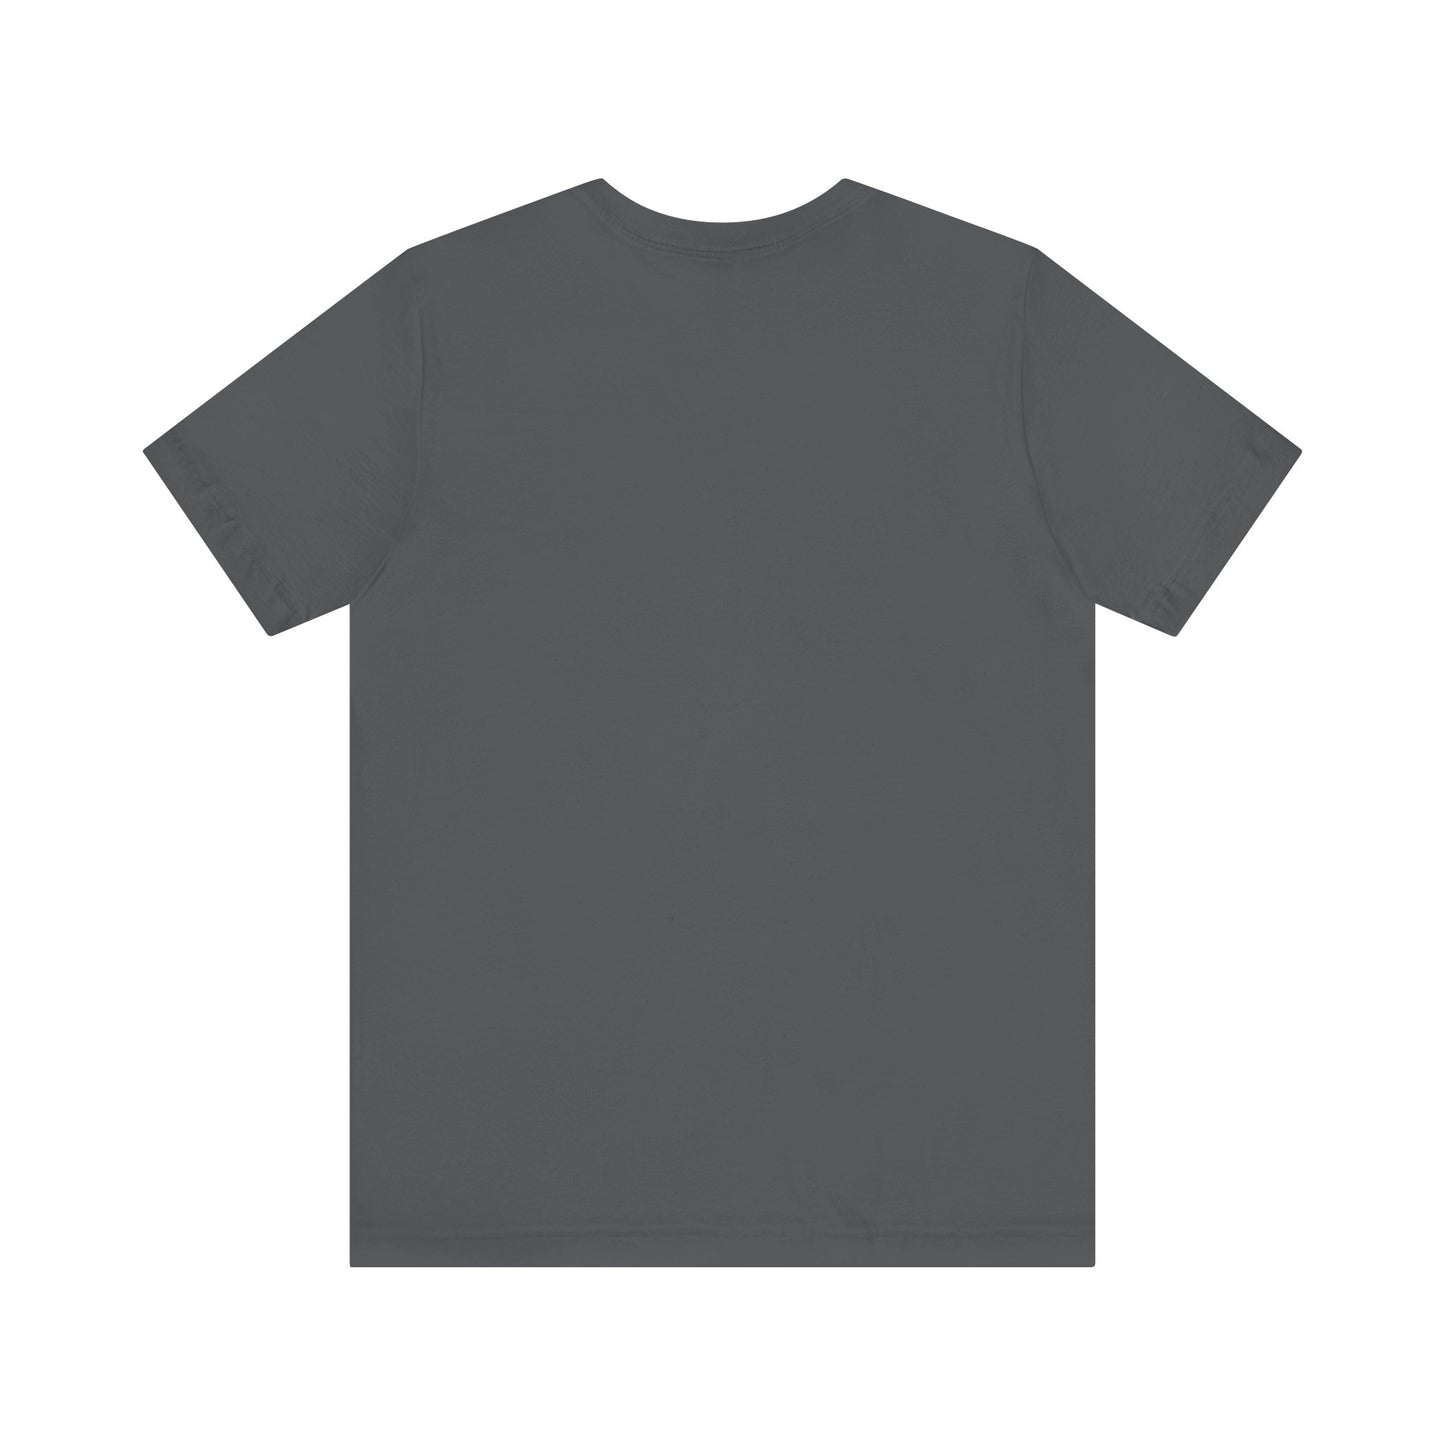 Chernivtsi T-shirt Unisex Jersey Short Sleeve Tee